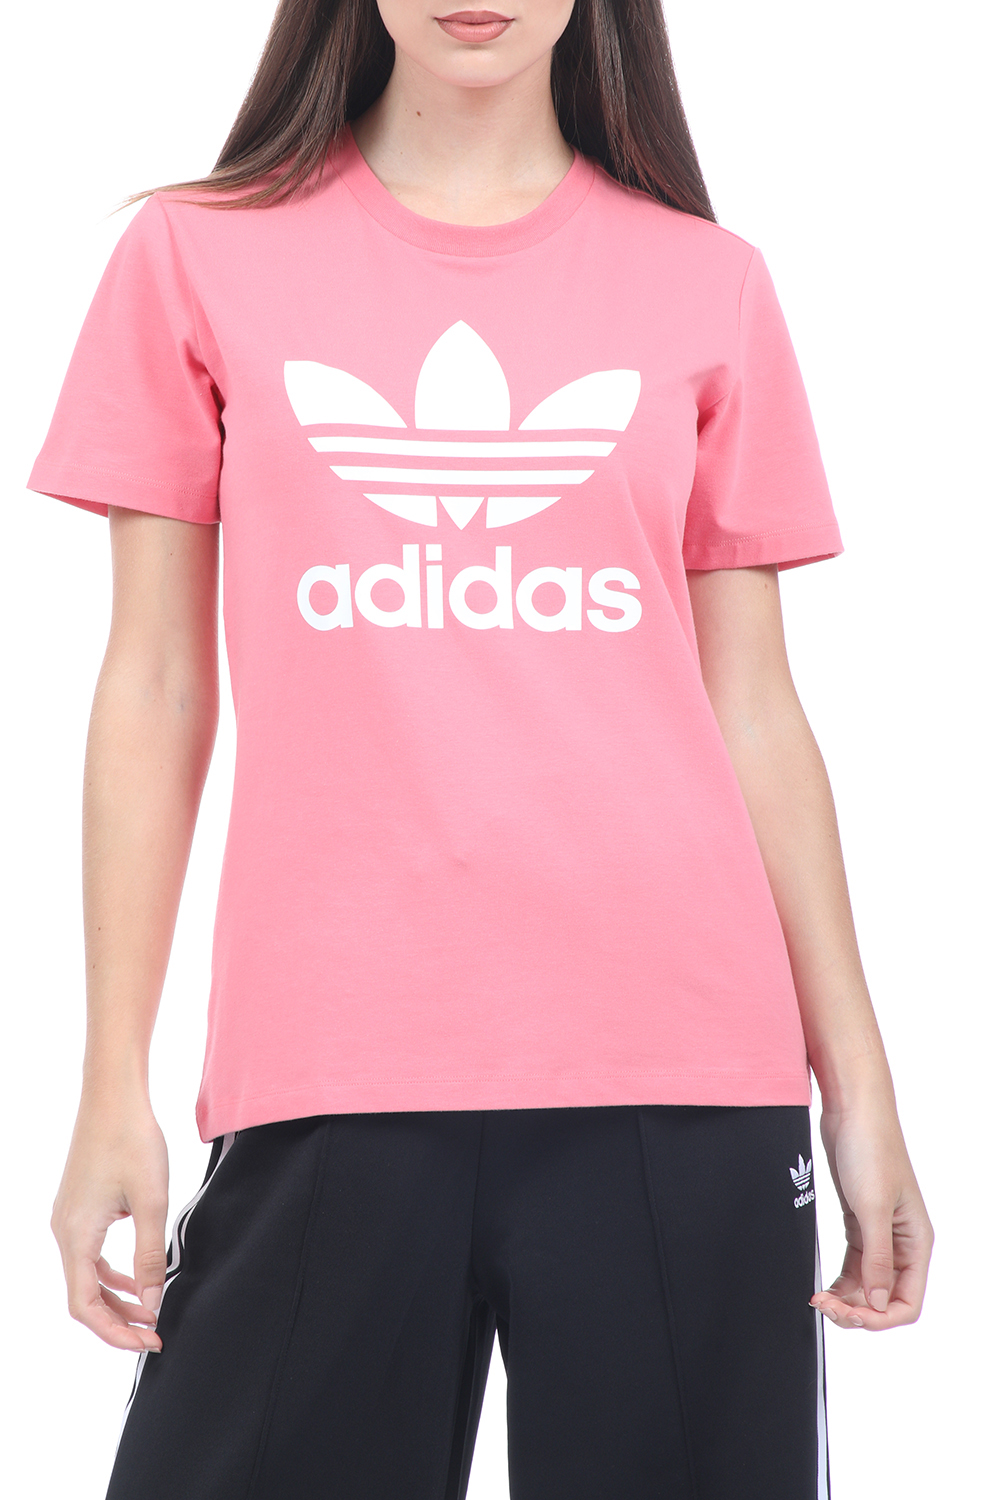 adidas Originals – Γυναικειο t-shirt adidas Originals TREFOIL ροζ